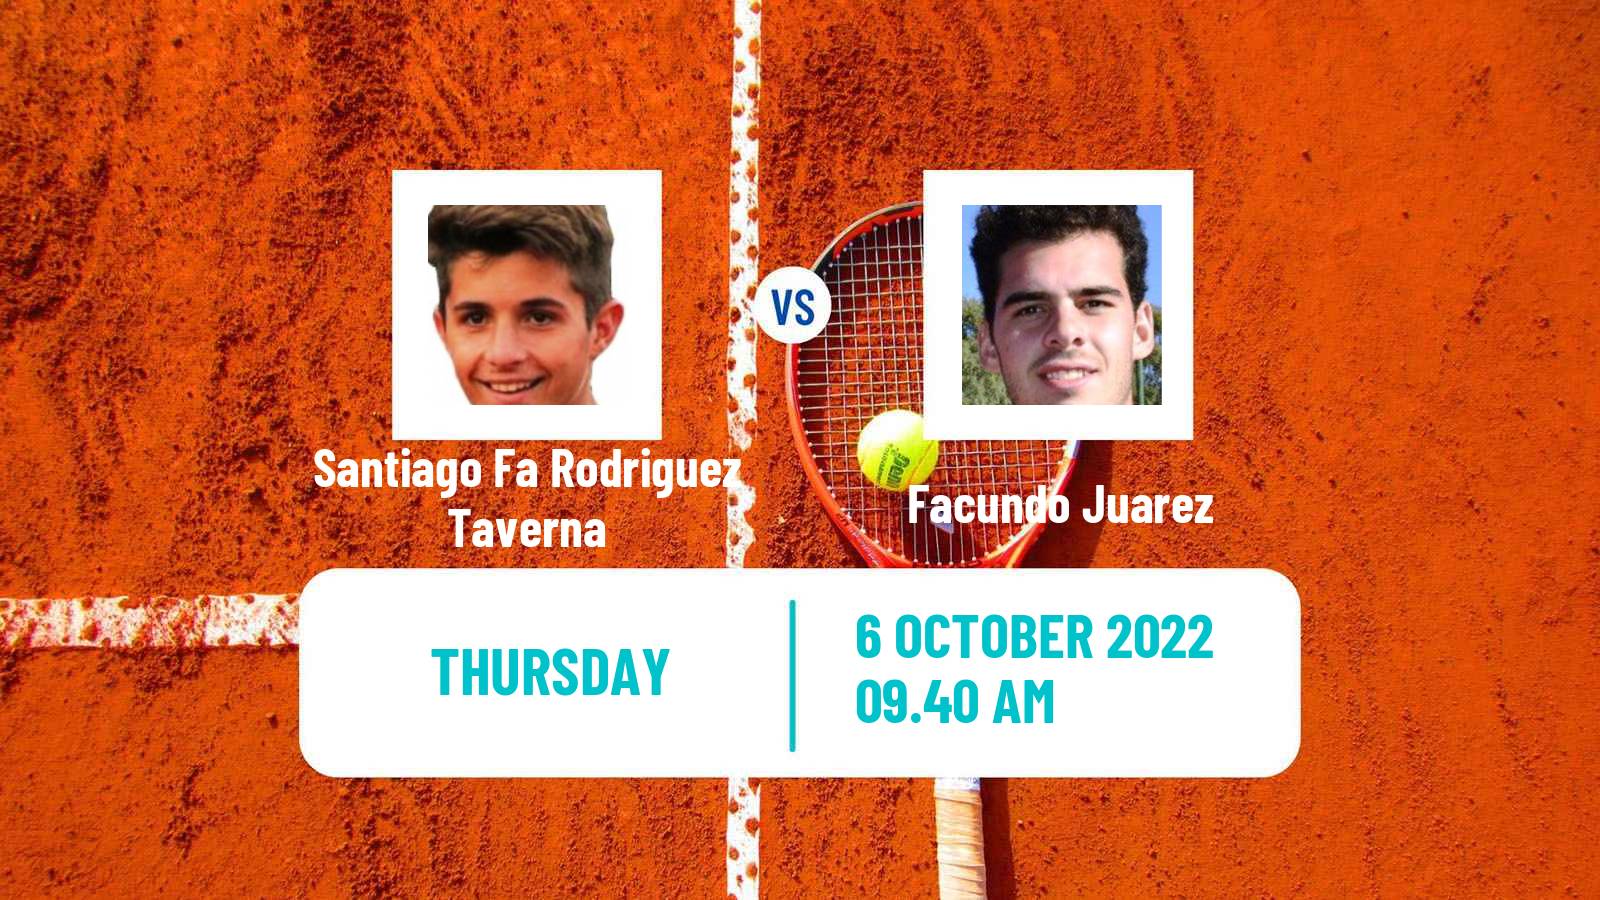 Tennis ATP Challenger Santiago Fa Rodriguez Taverna - Facundo Juarez